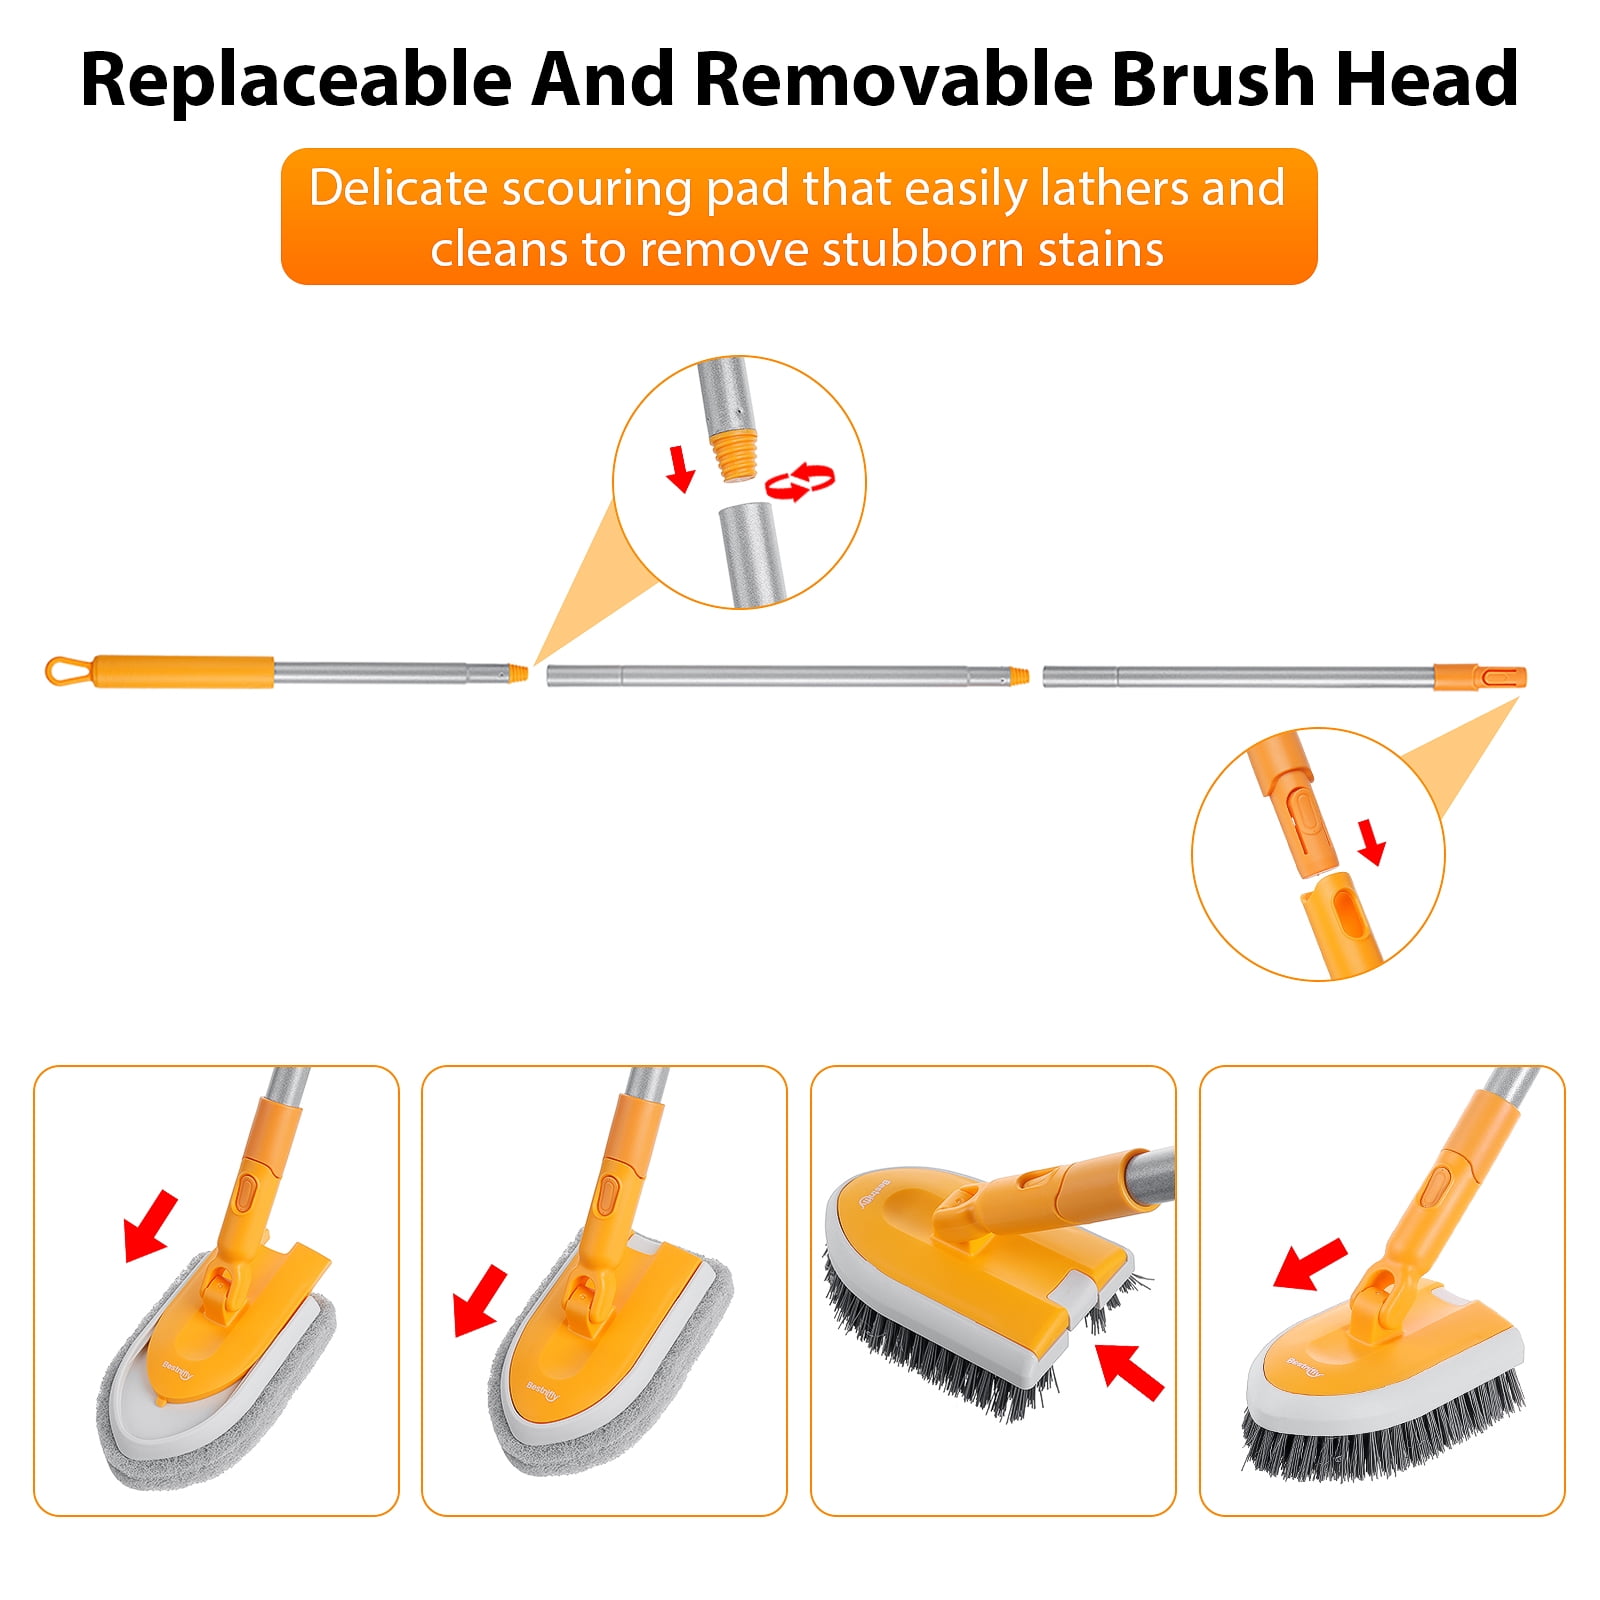 Birdwell Cleaning 473-48 Polypropylene Bristle Handheld Curved Scrubber  Brush: Block Style Hand Scrub Brushes (075155004739-1)